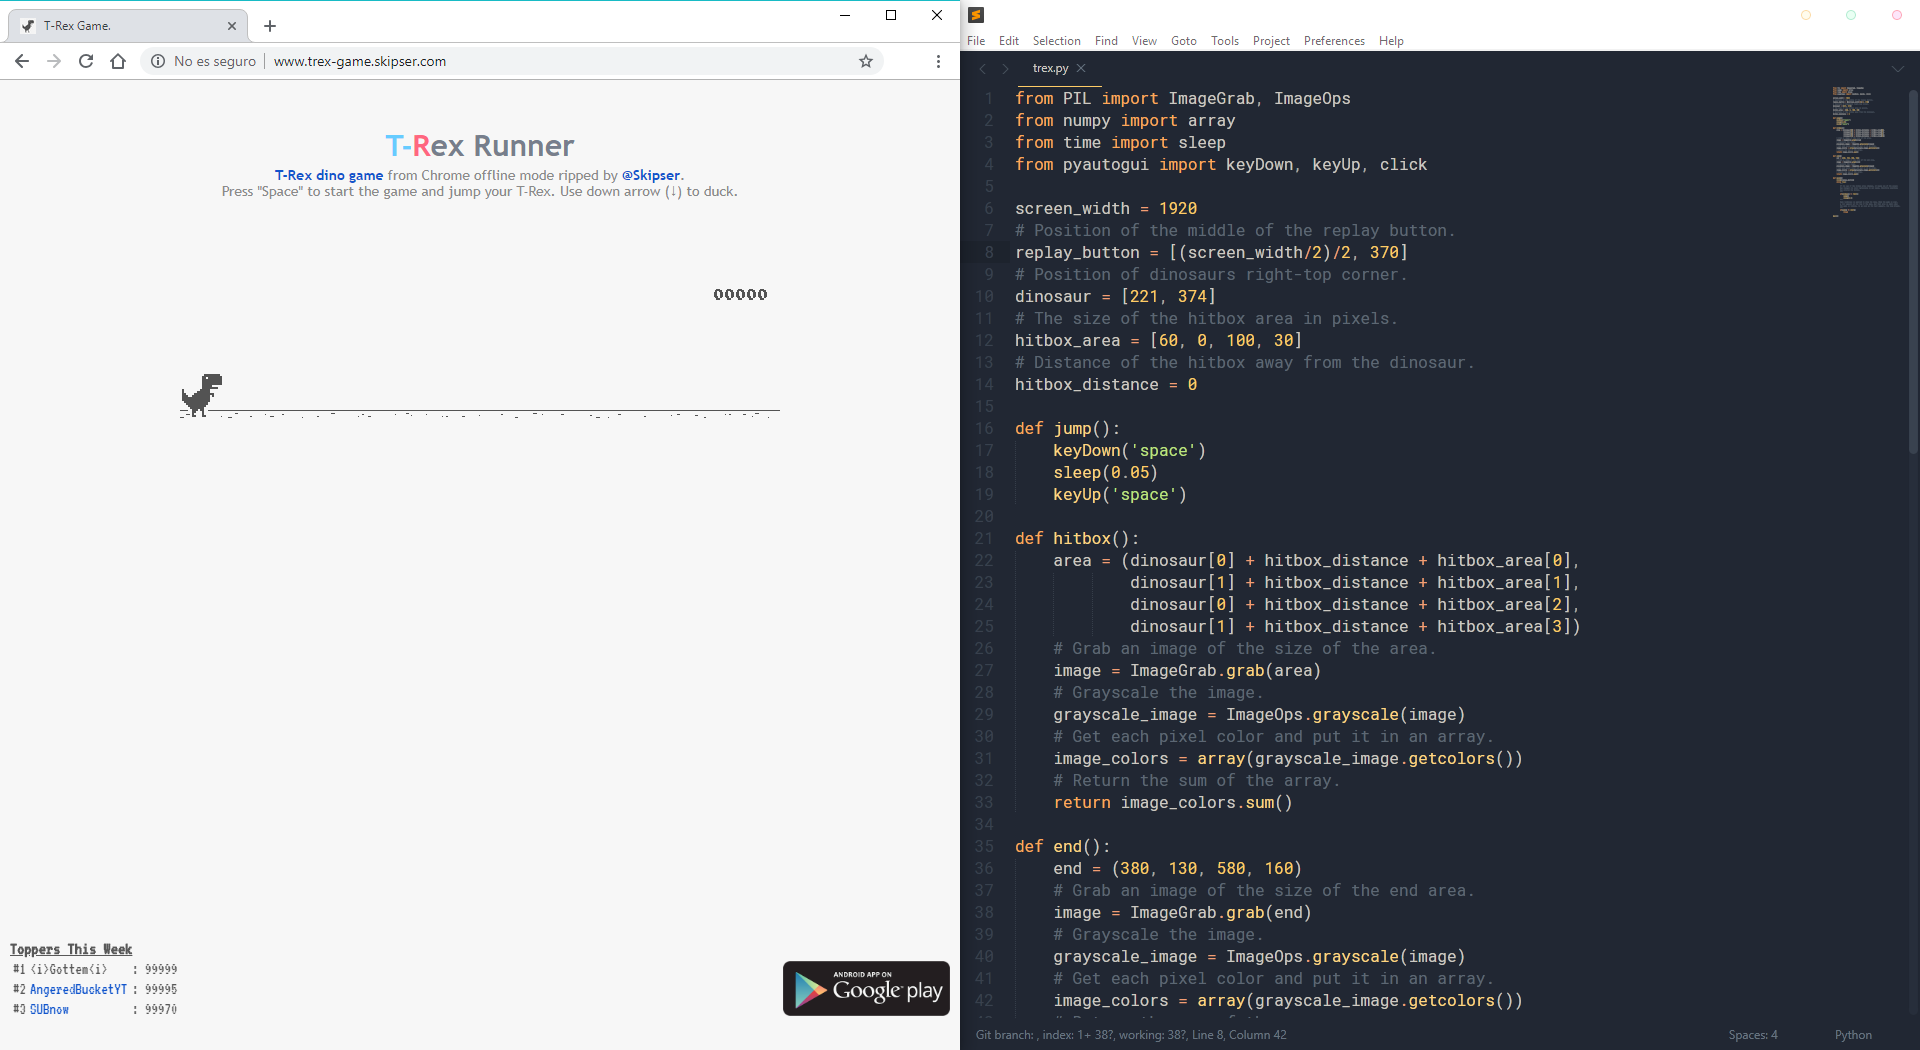 GitHub - mrzero-0/Chrome-Dino-Bot: Just Tried To Make a python bot that  plays Chrome Dino game